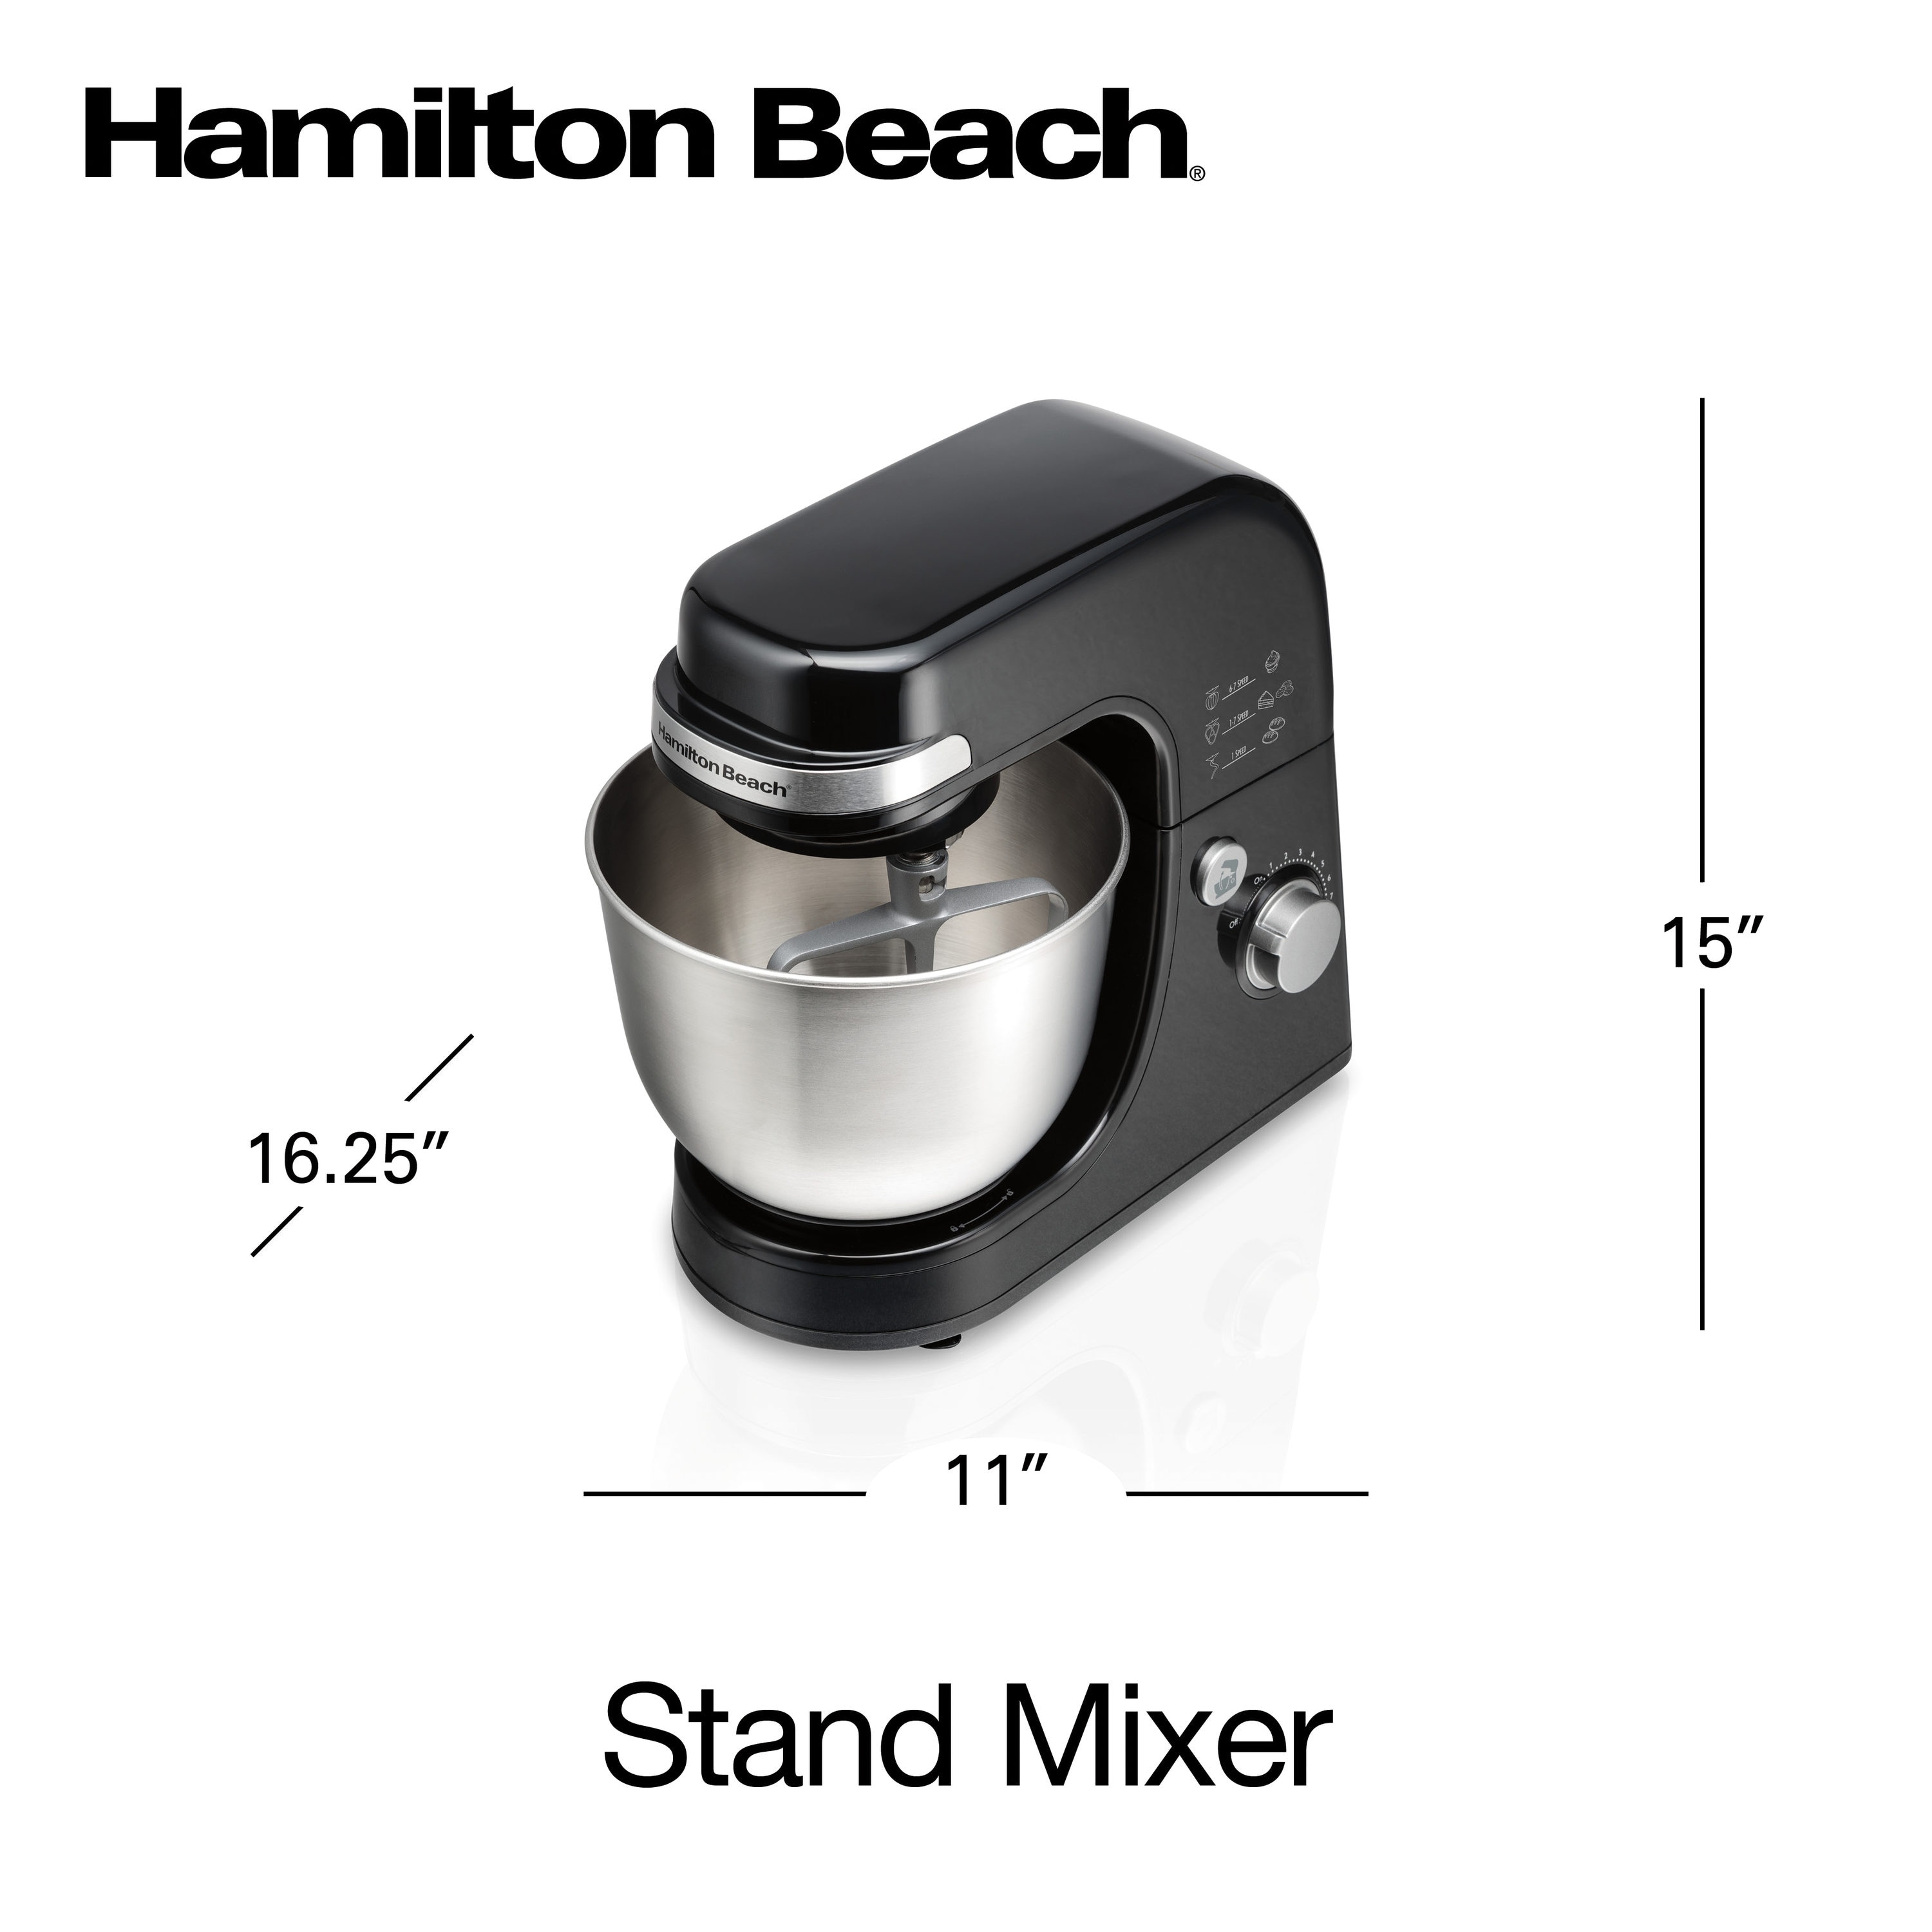 Hamilton Beach Stand Mixer, Black